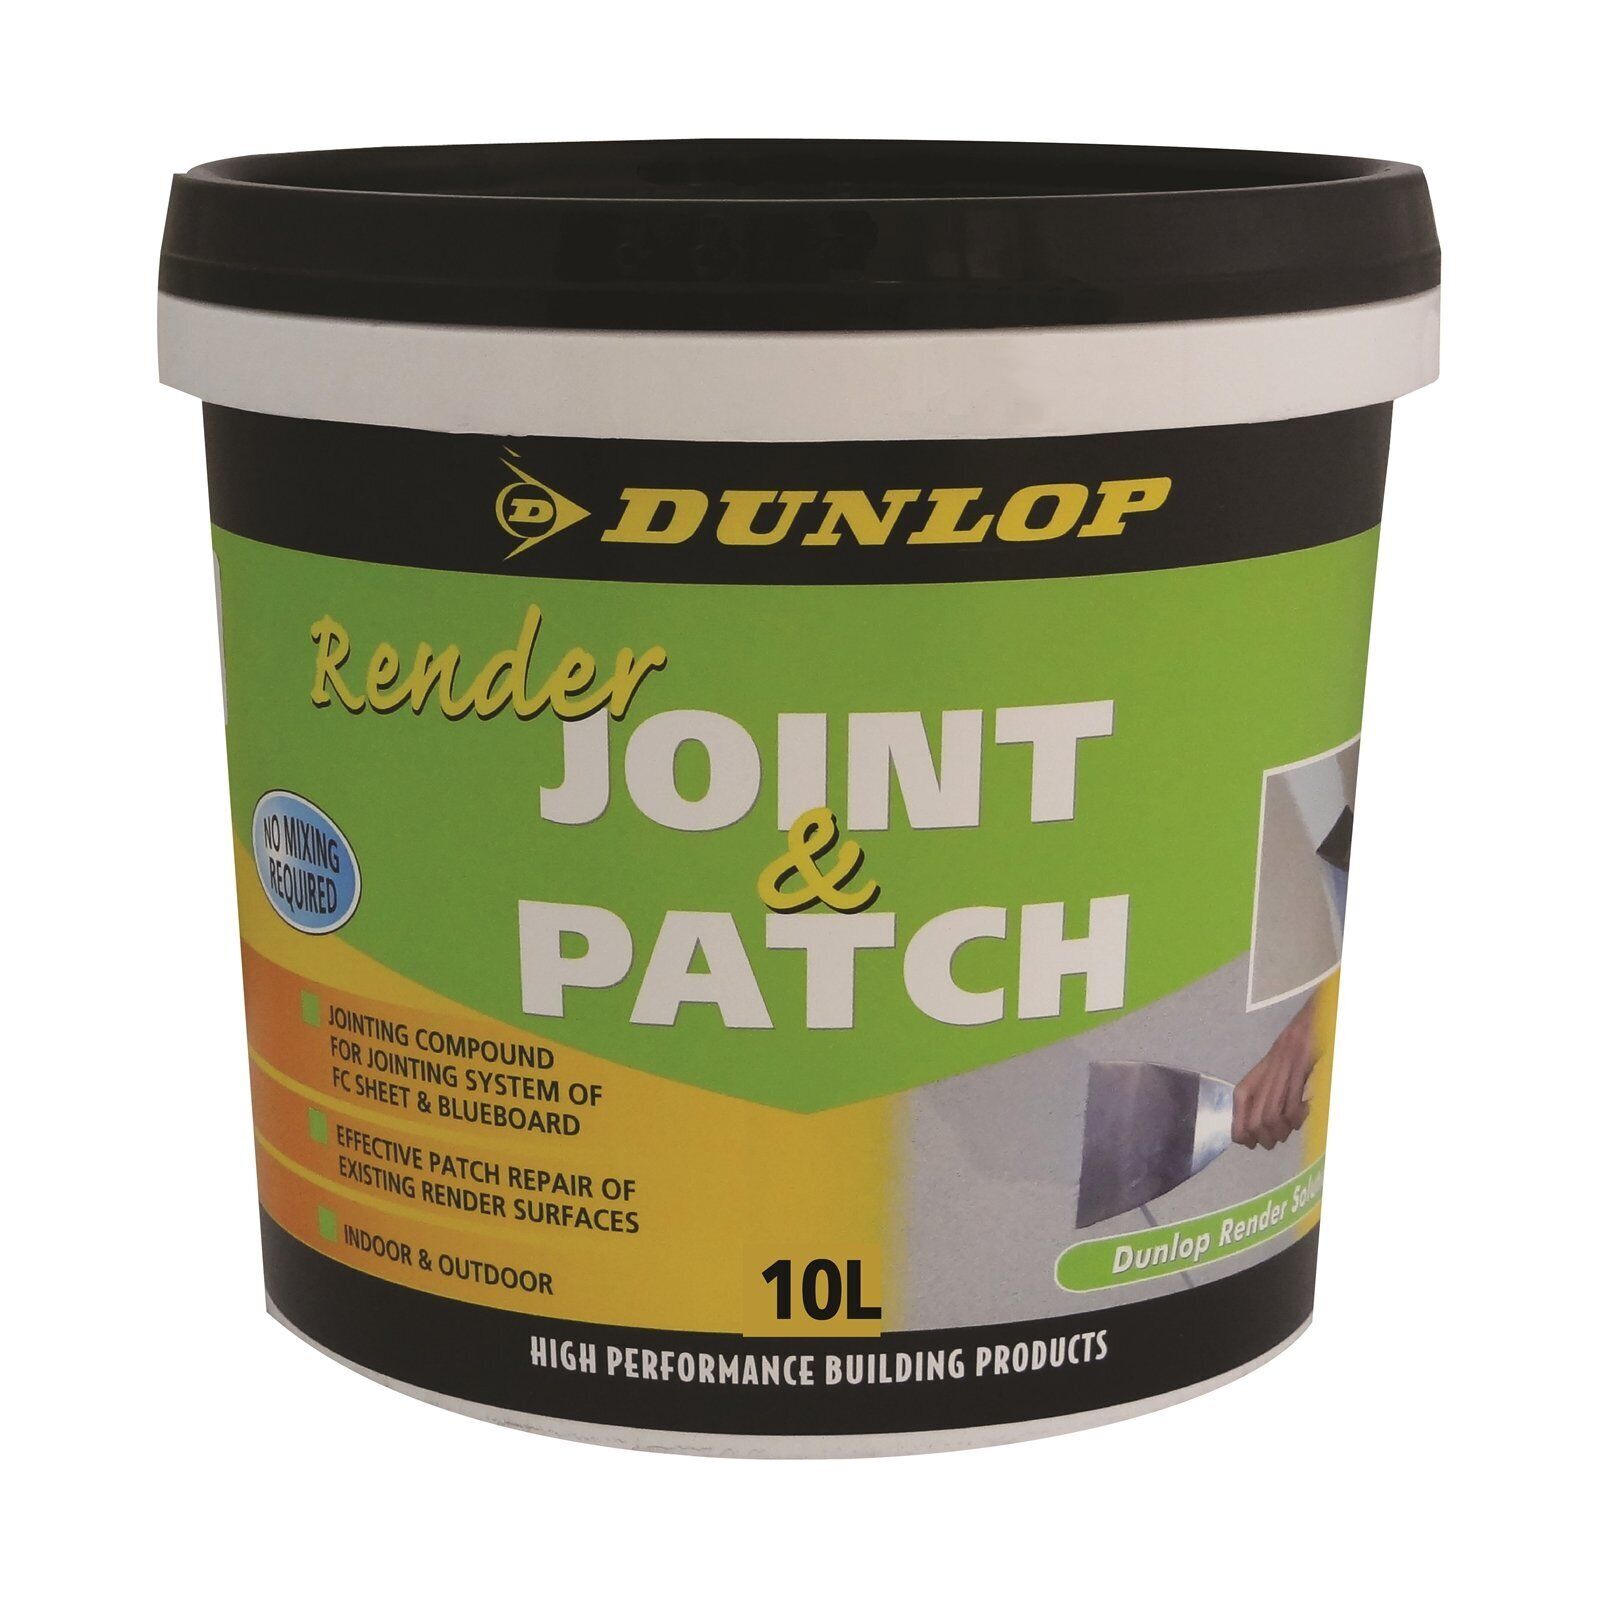 Dunlop 10L Render Joint And Patch cement concreting building foundation build